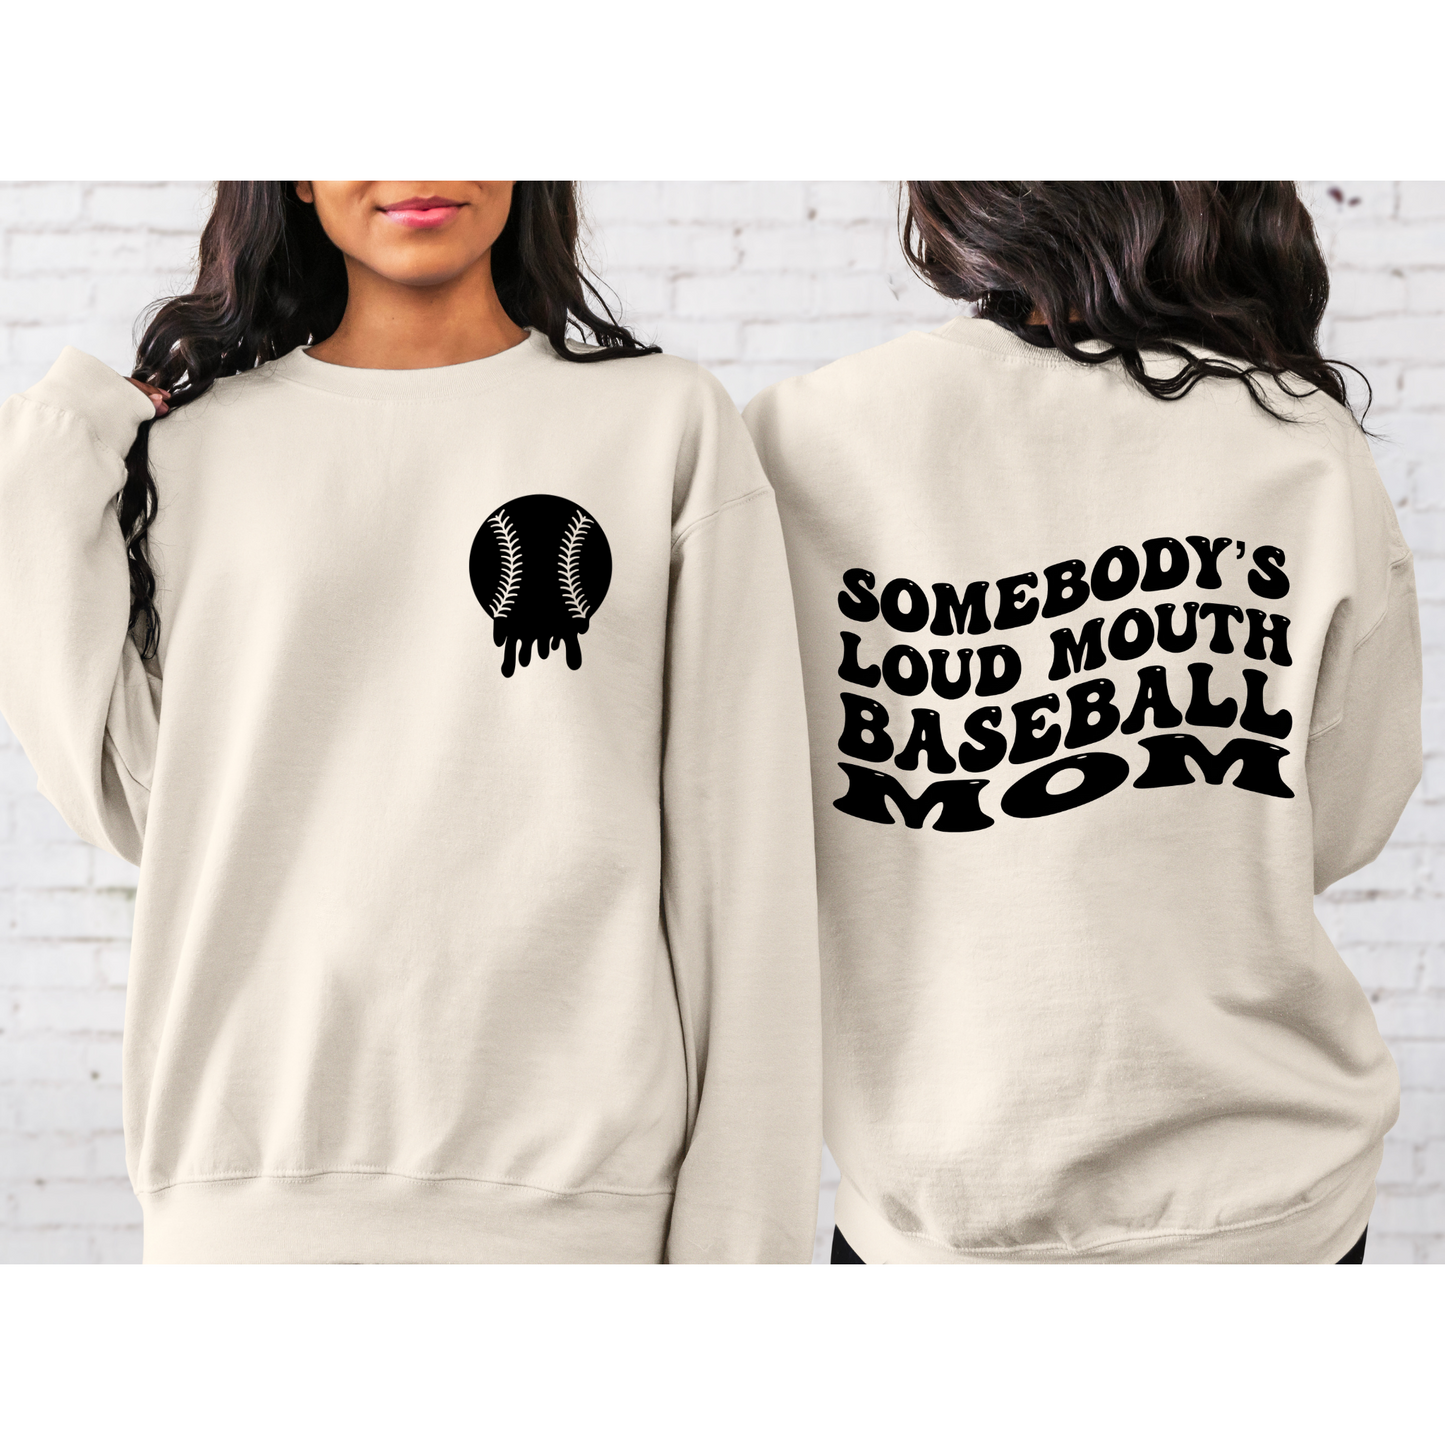 Somebody's Loud Mouth Baseball Mom Crewneck Sweatshirt Sand